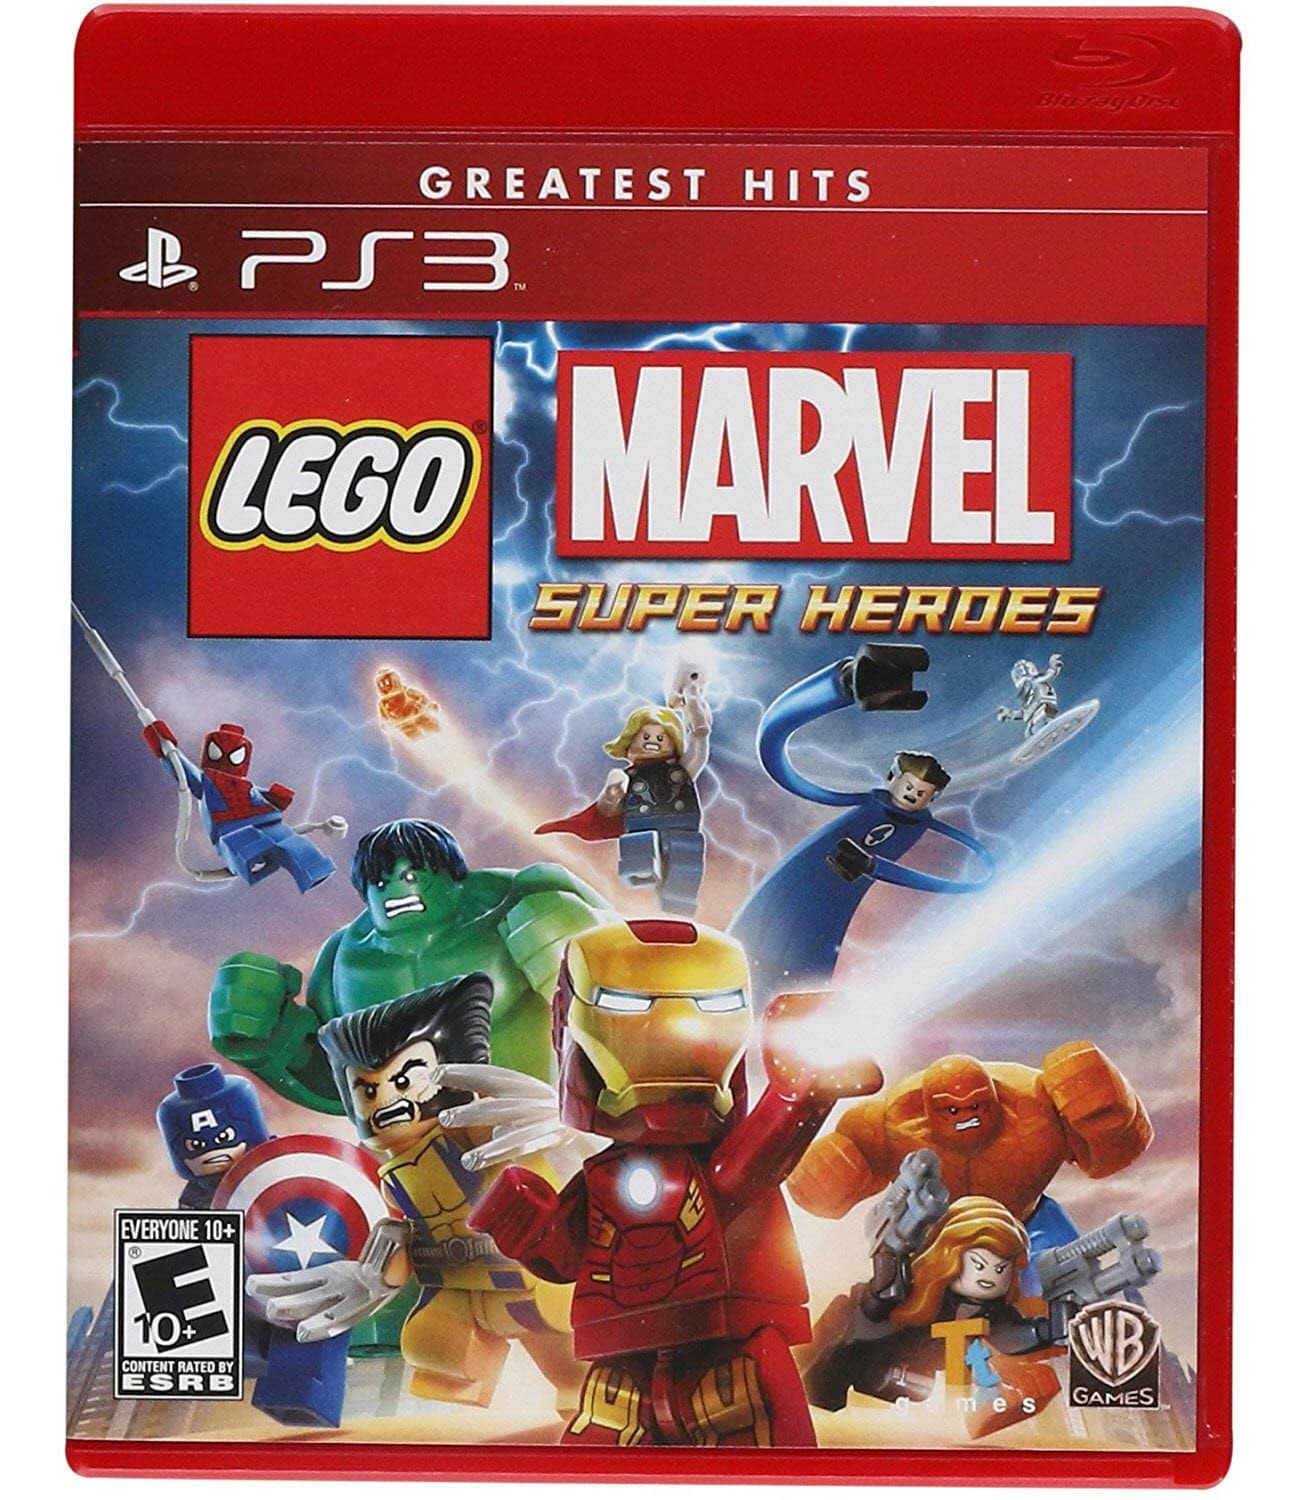 Lego: Marvel Super Heroes - PlayStation 3